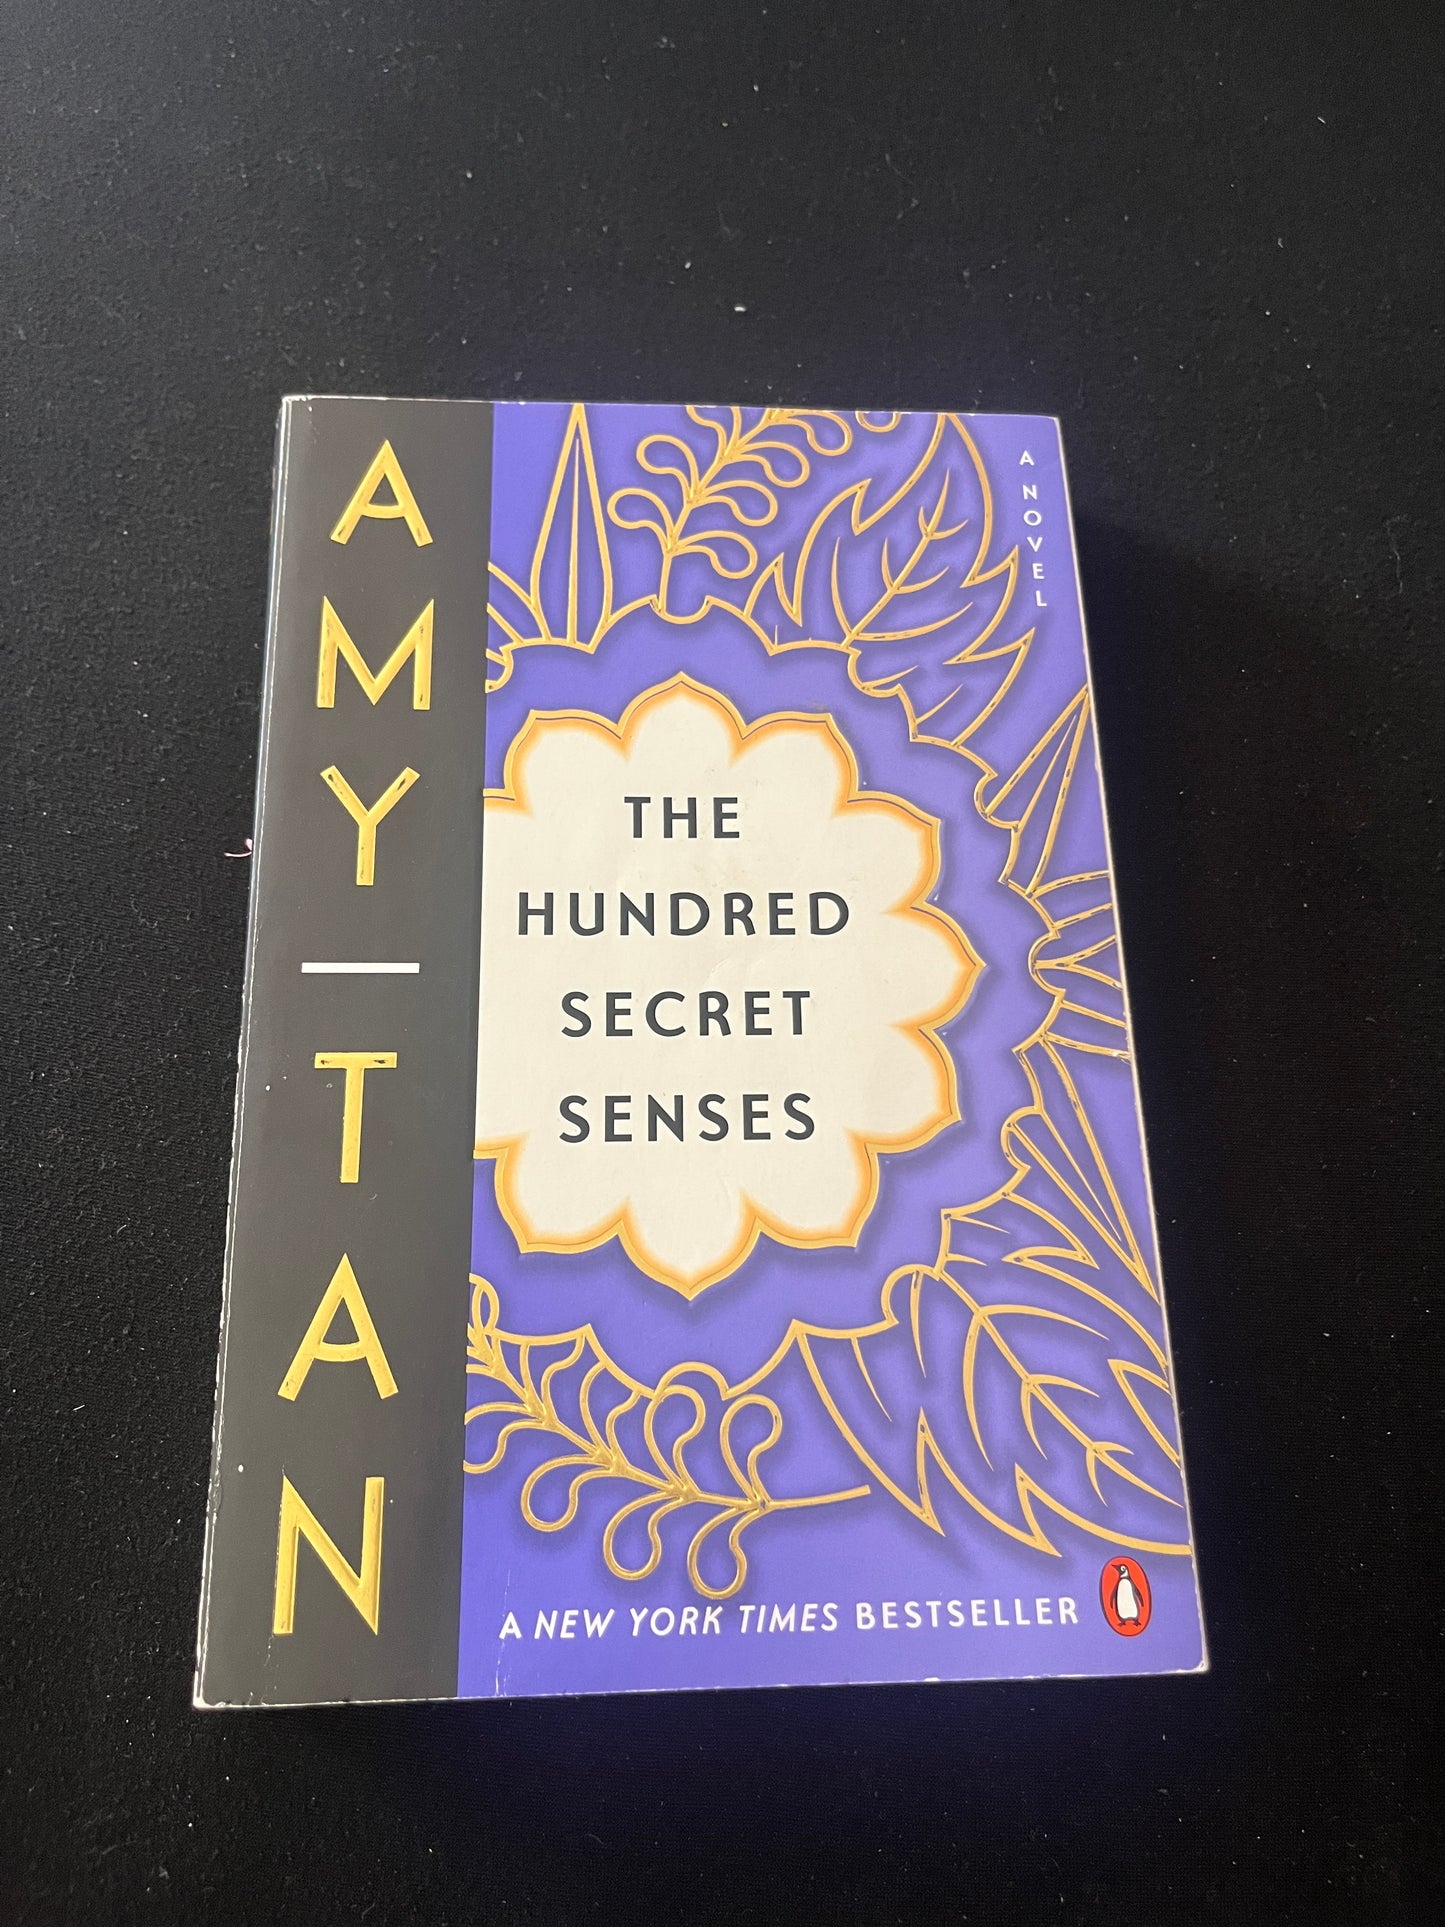 THE HUNDRED SECRET SENSES by Amy Tan